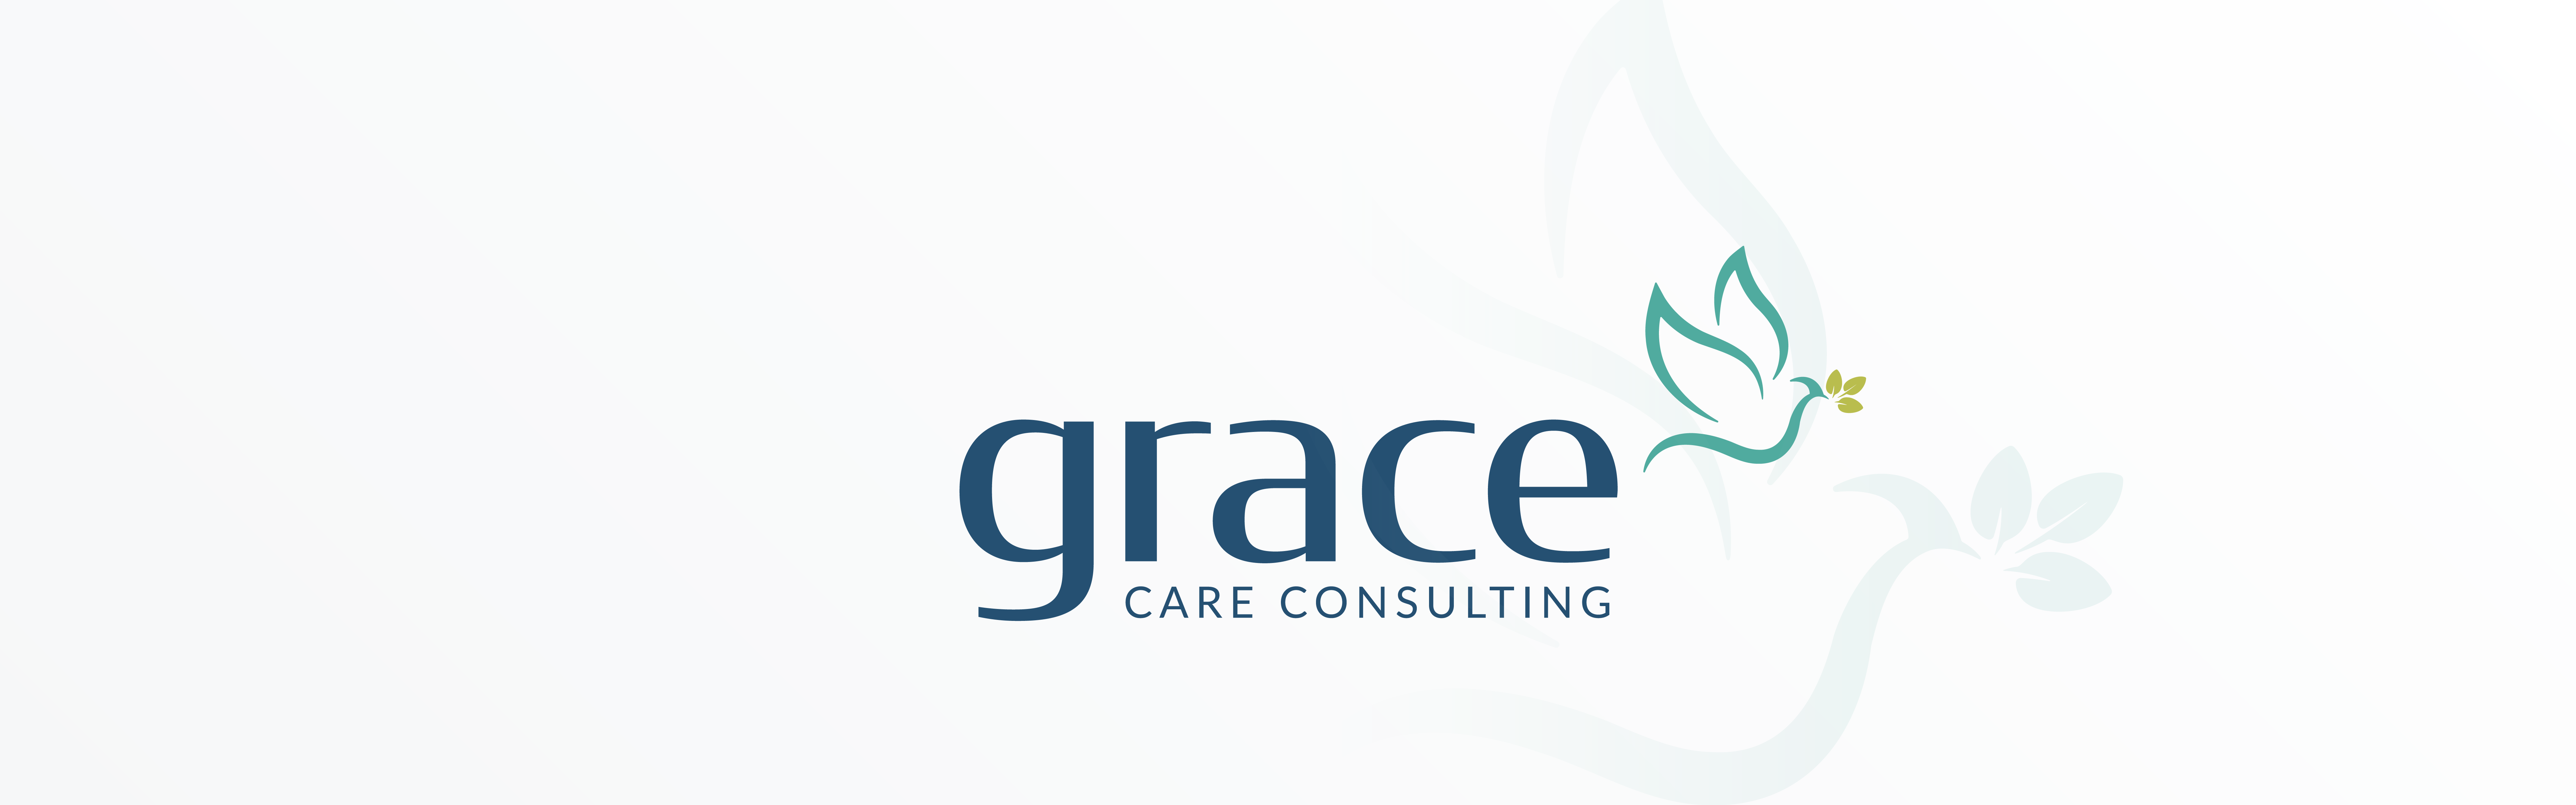 Grace Care Consulting logo design